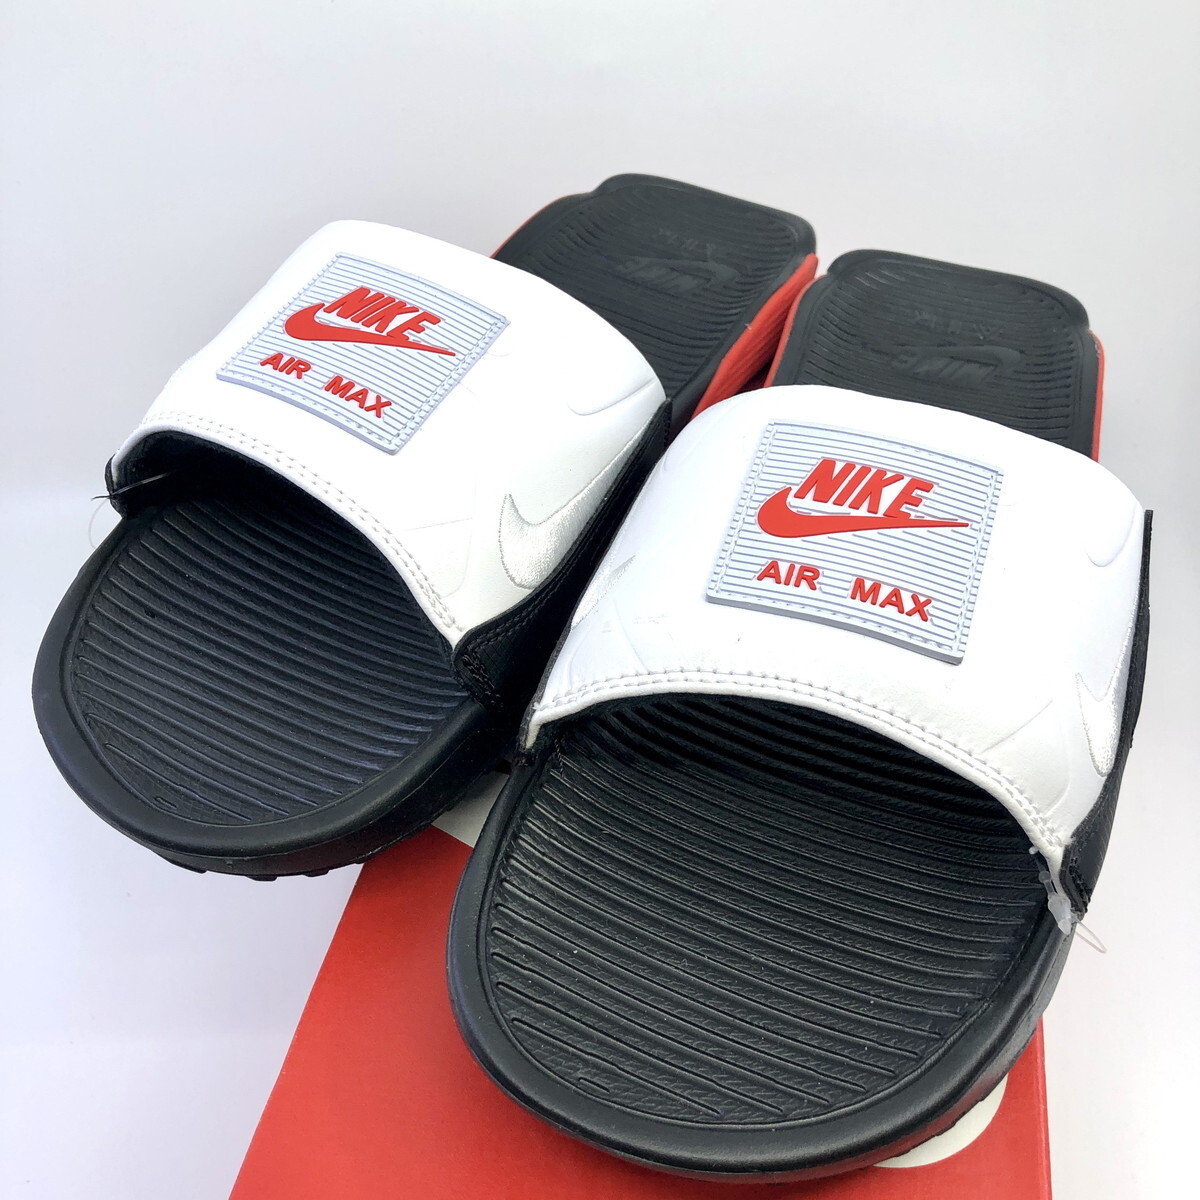  Nike air max 90 скользящий 28.0cm BQ4635-003 черный / Chile красный / белый мужской сандалии (Y0513_9)